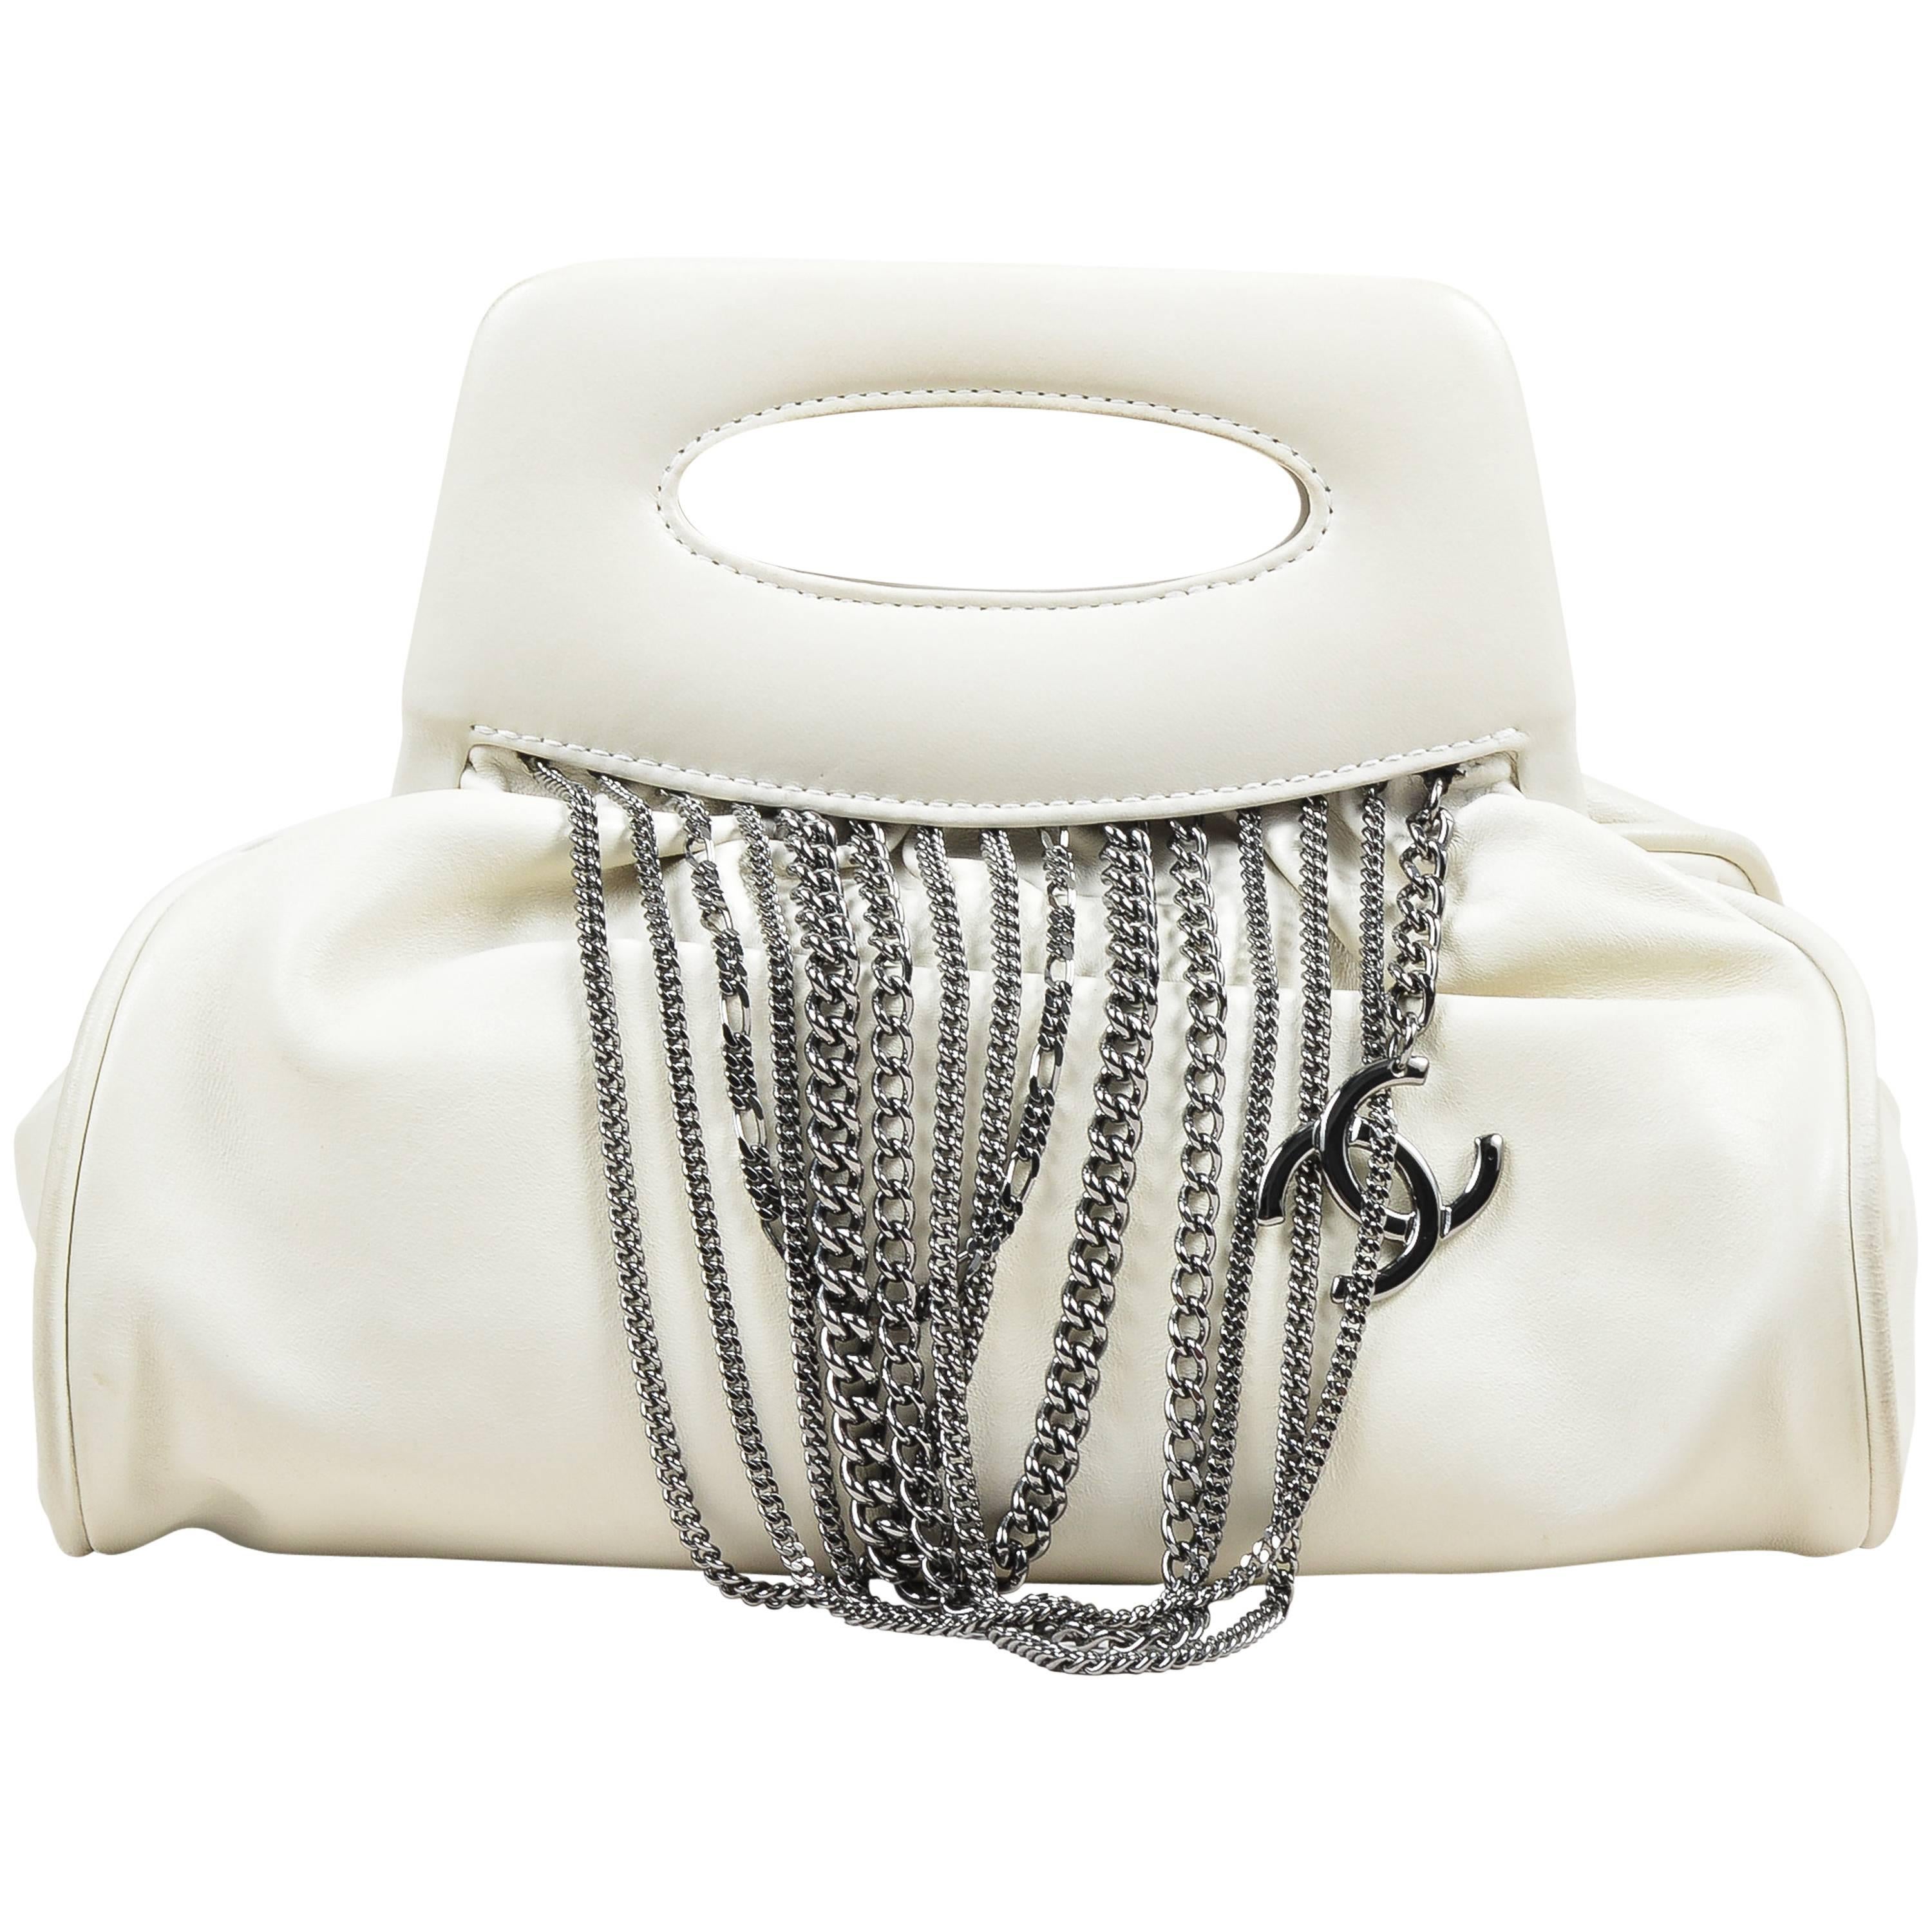 Chanel Off White Leather 'CC' Chain Embellished Satchel Handbag For Sale